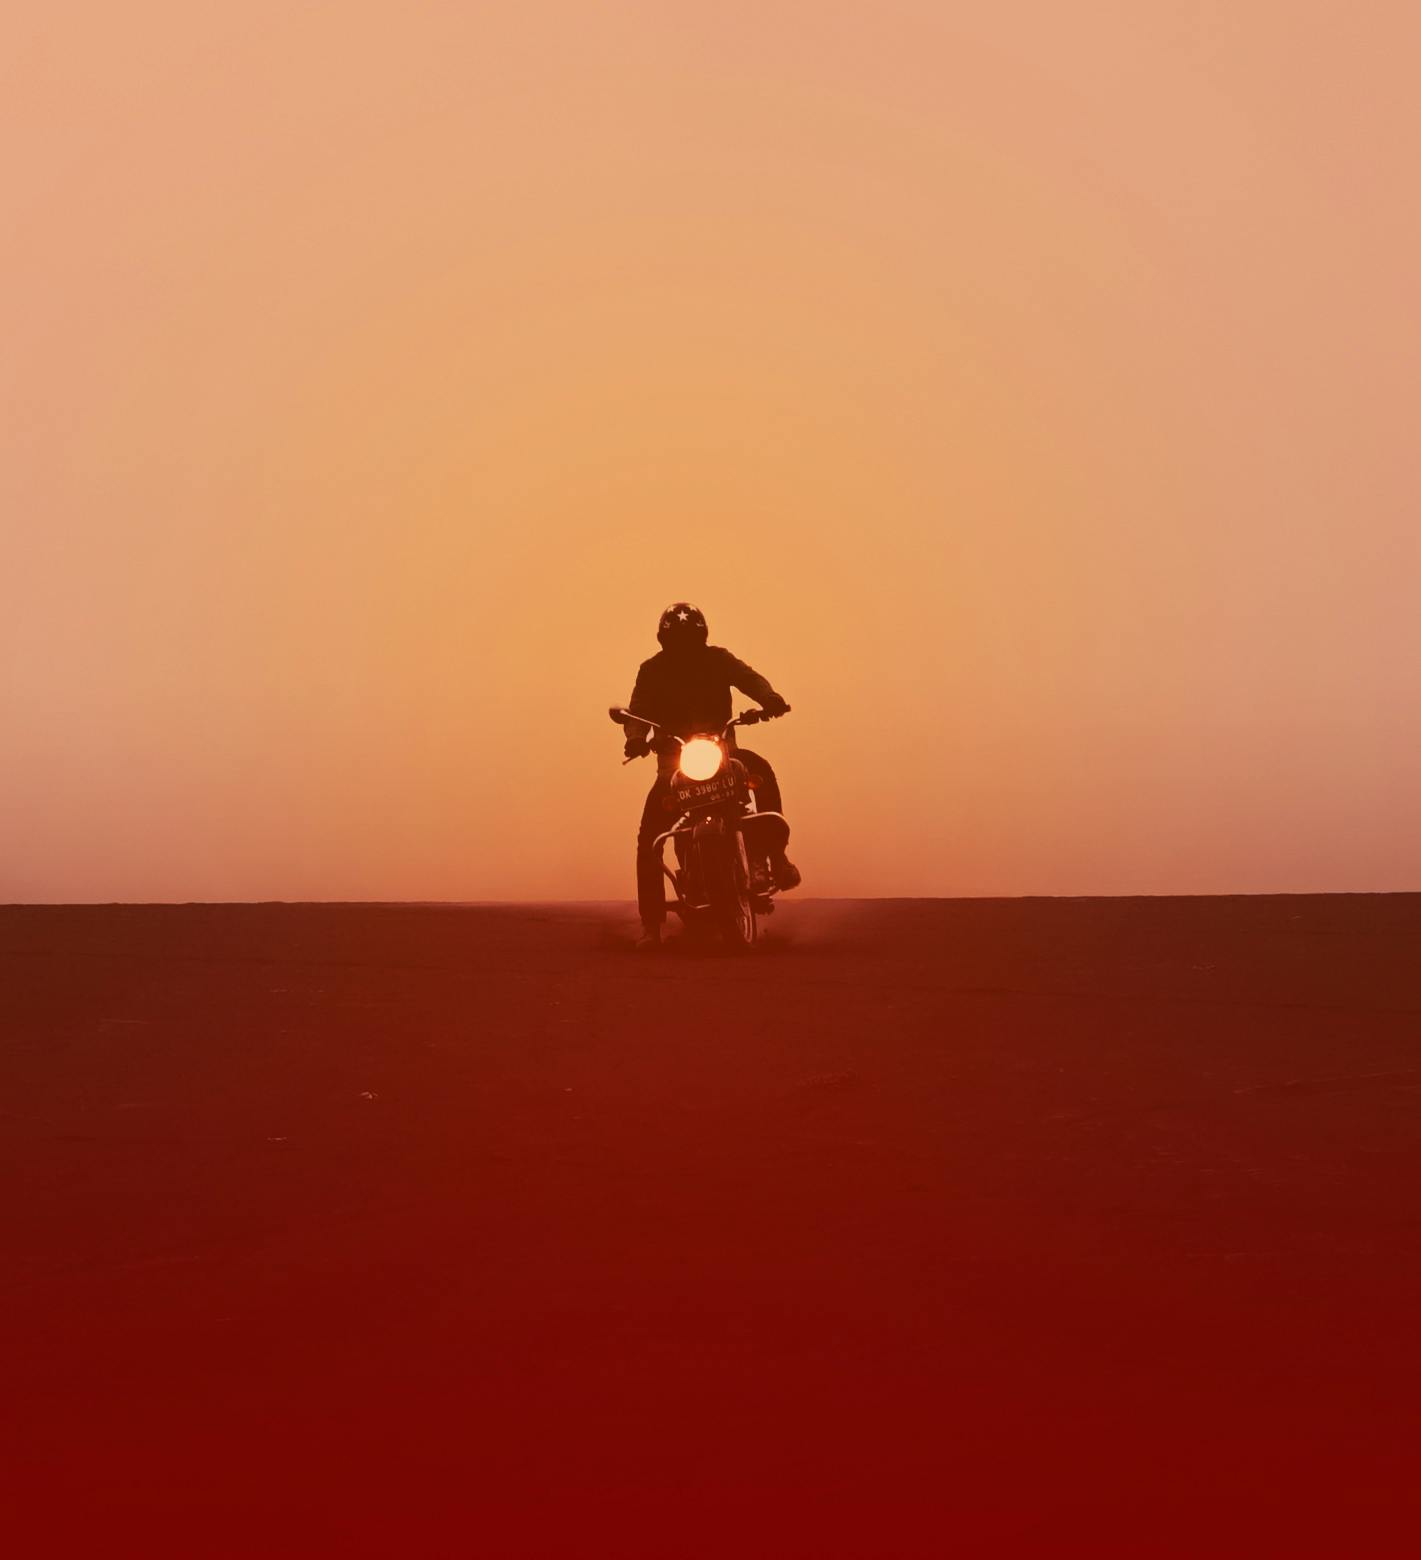 Jorge Abian on top of a bike in the desert.